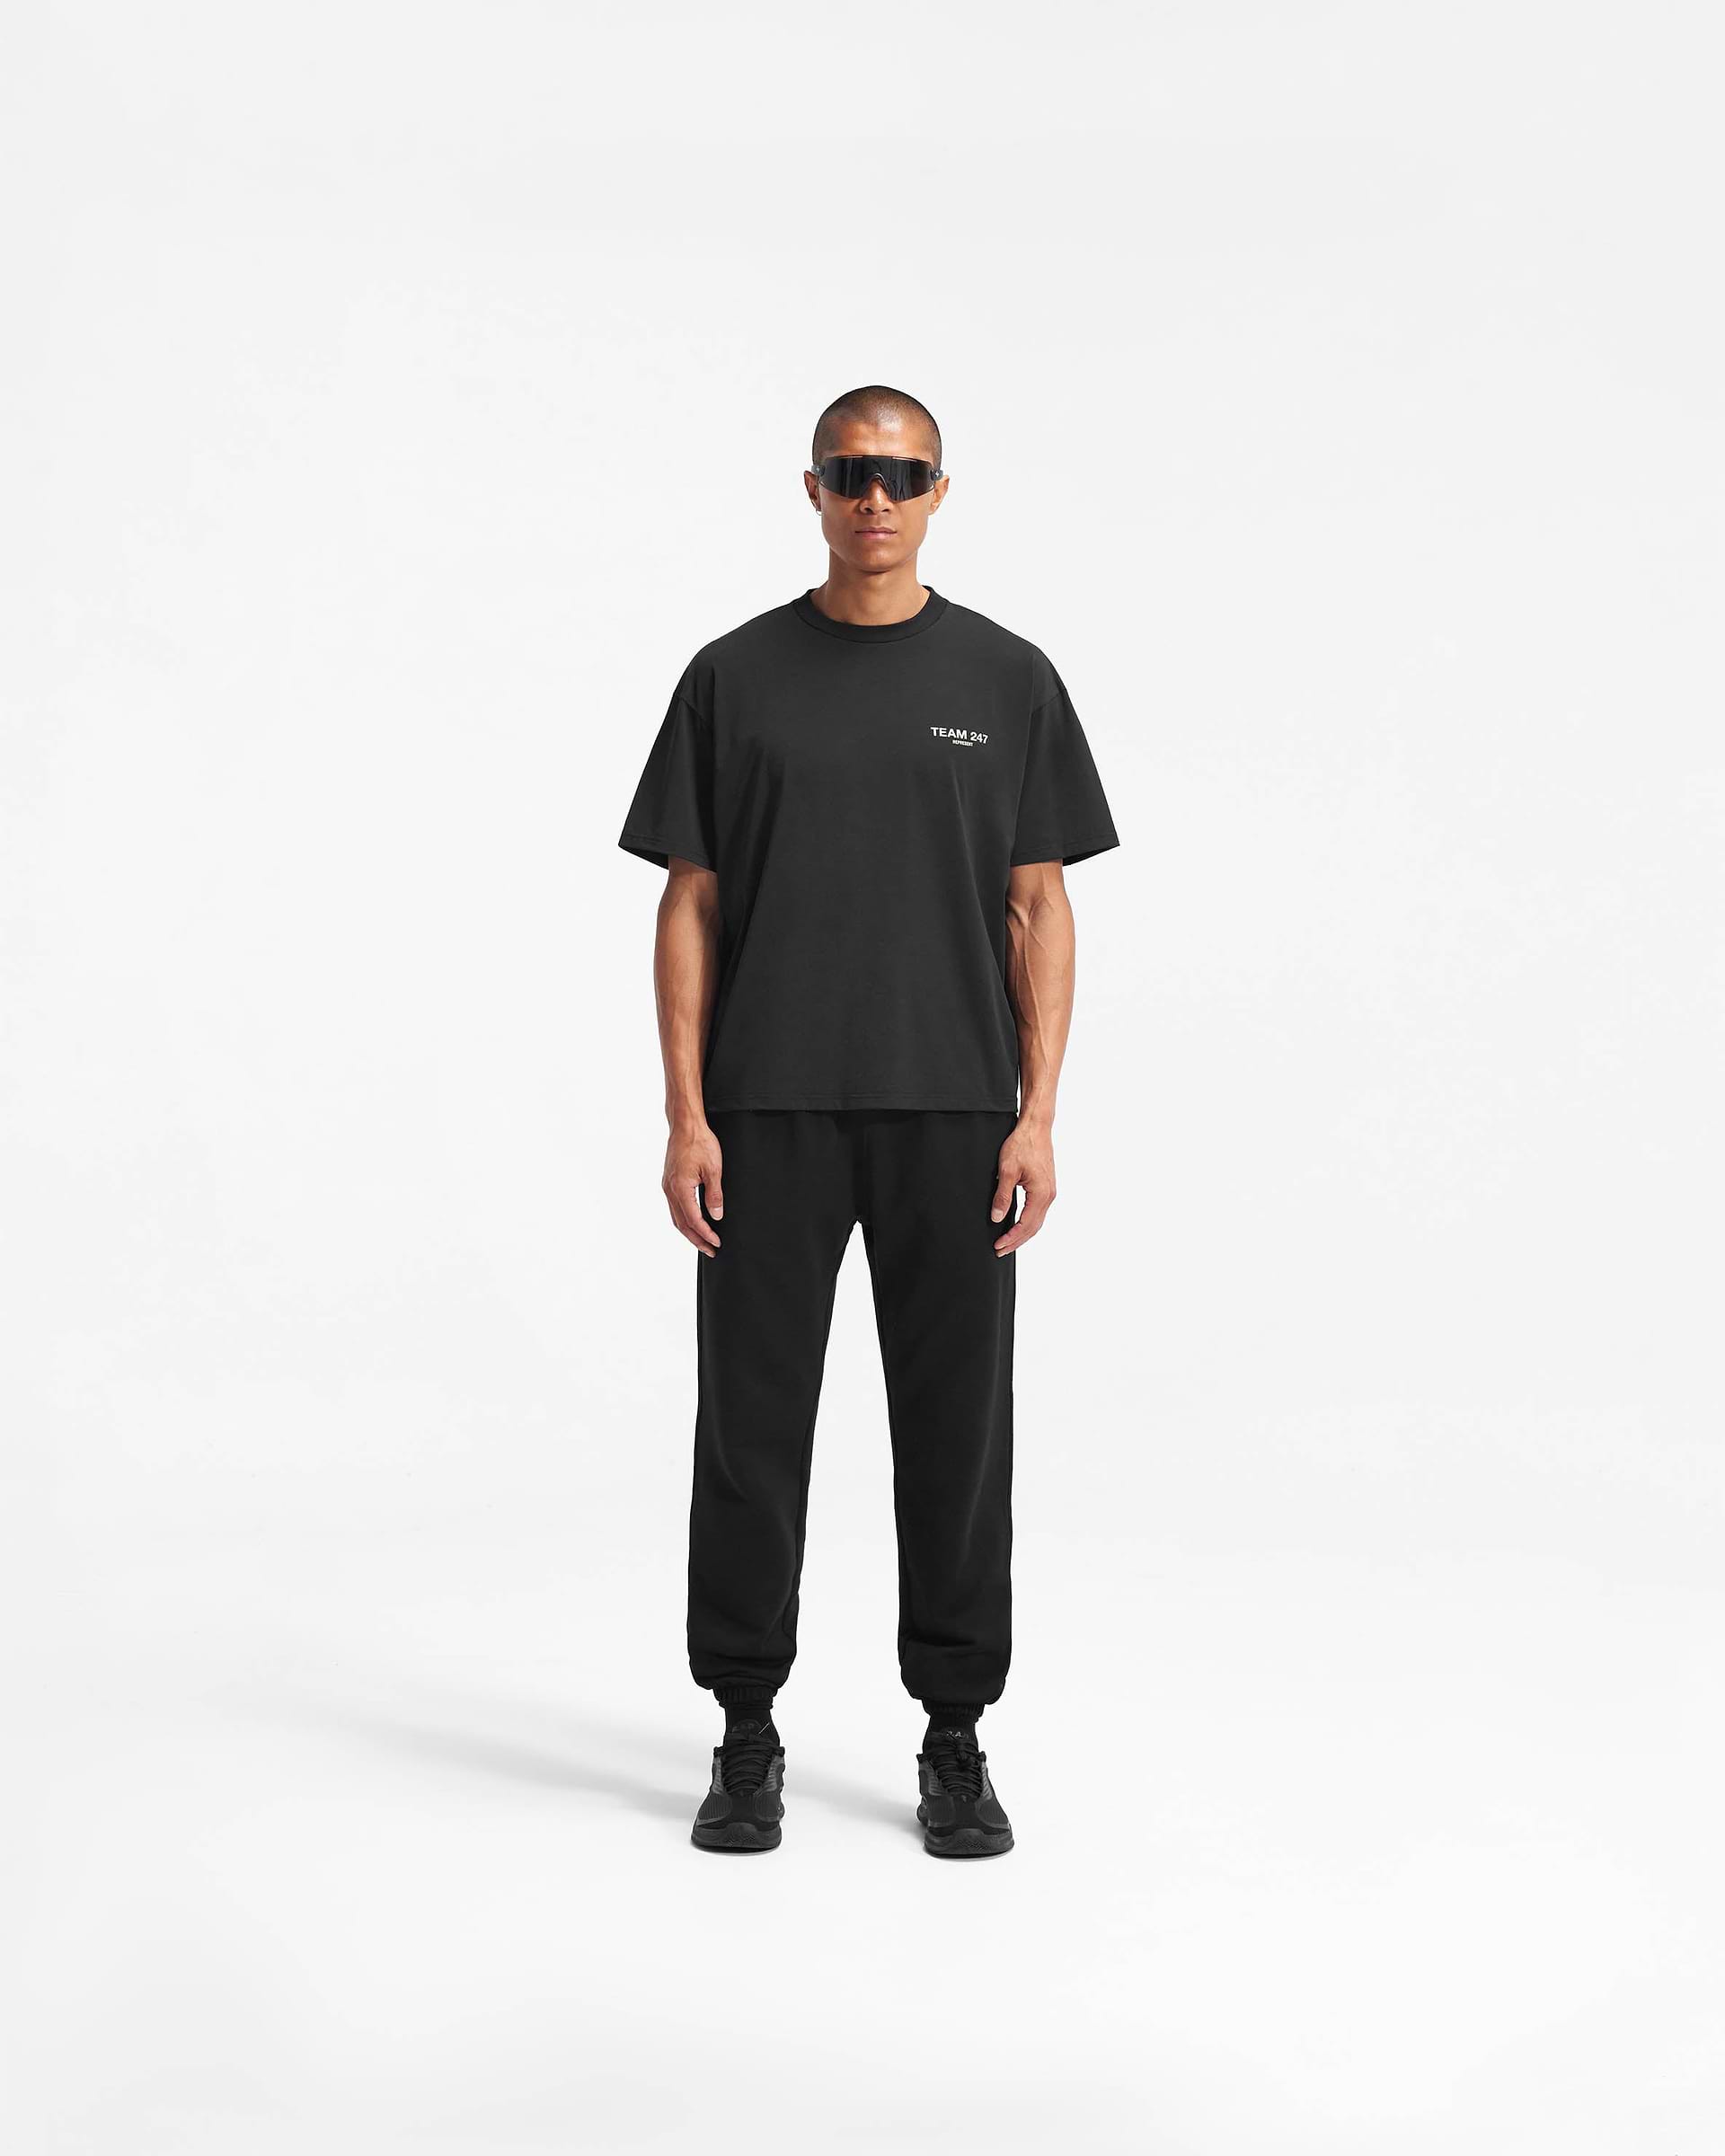 | T-Shirt Black Oversized 247 CLO | REPRESENT Team